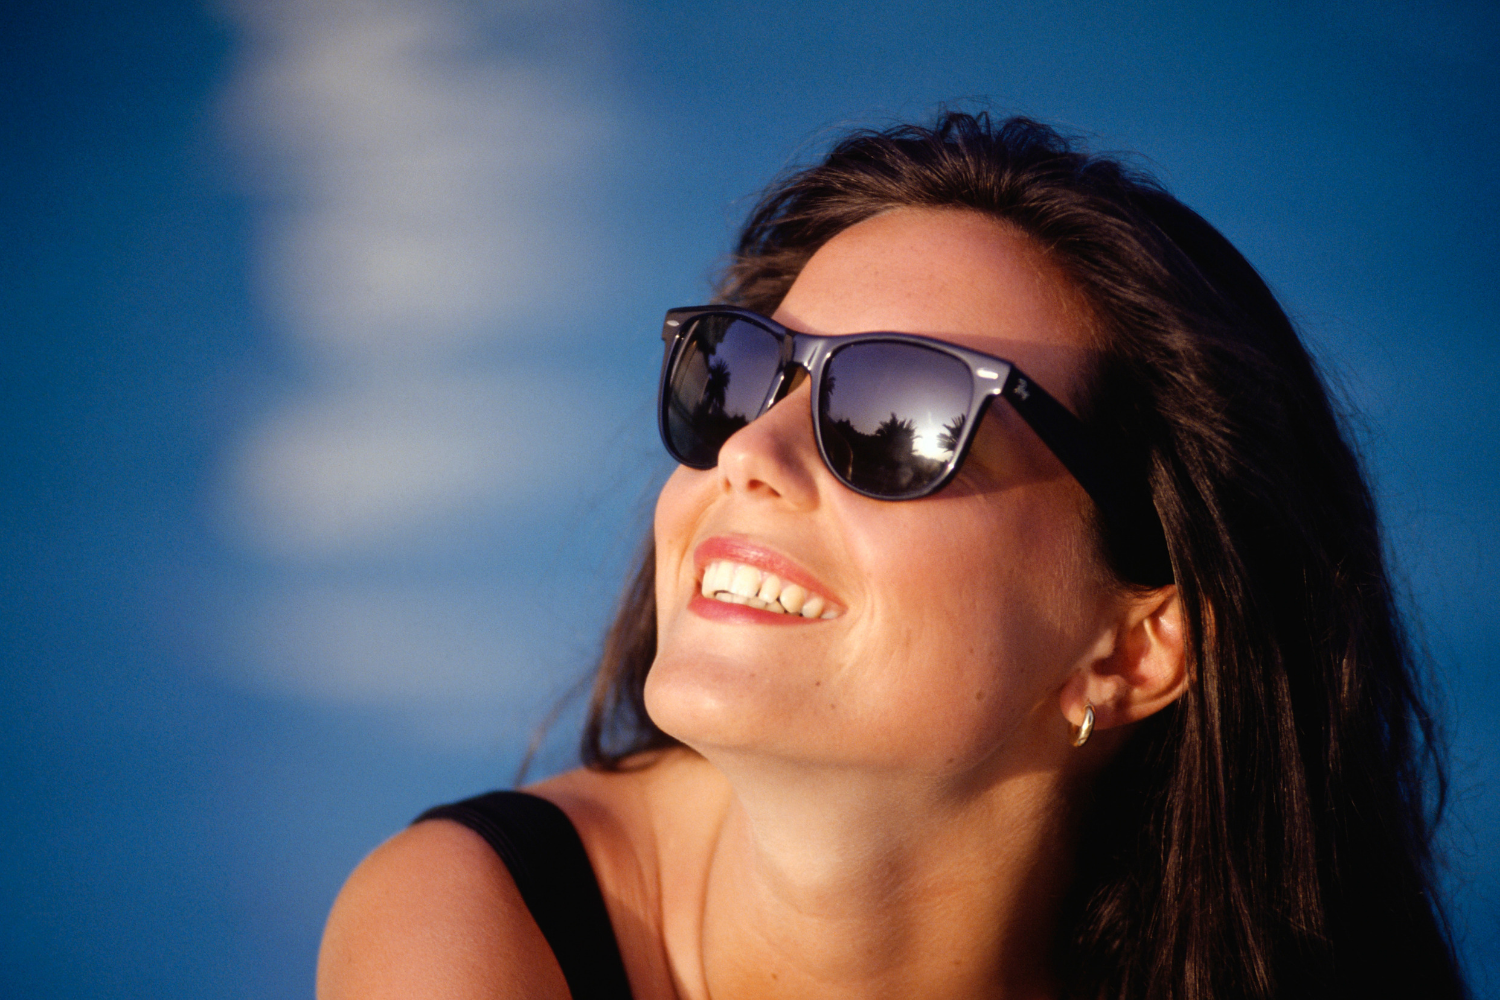 Lady smiling wearing cheaper sunglasses